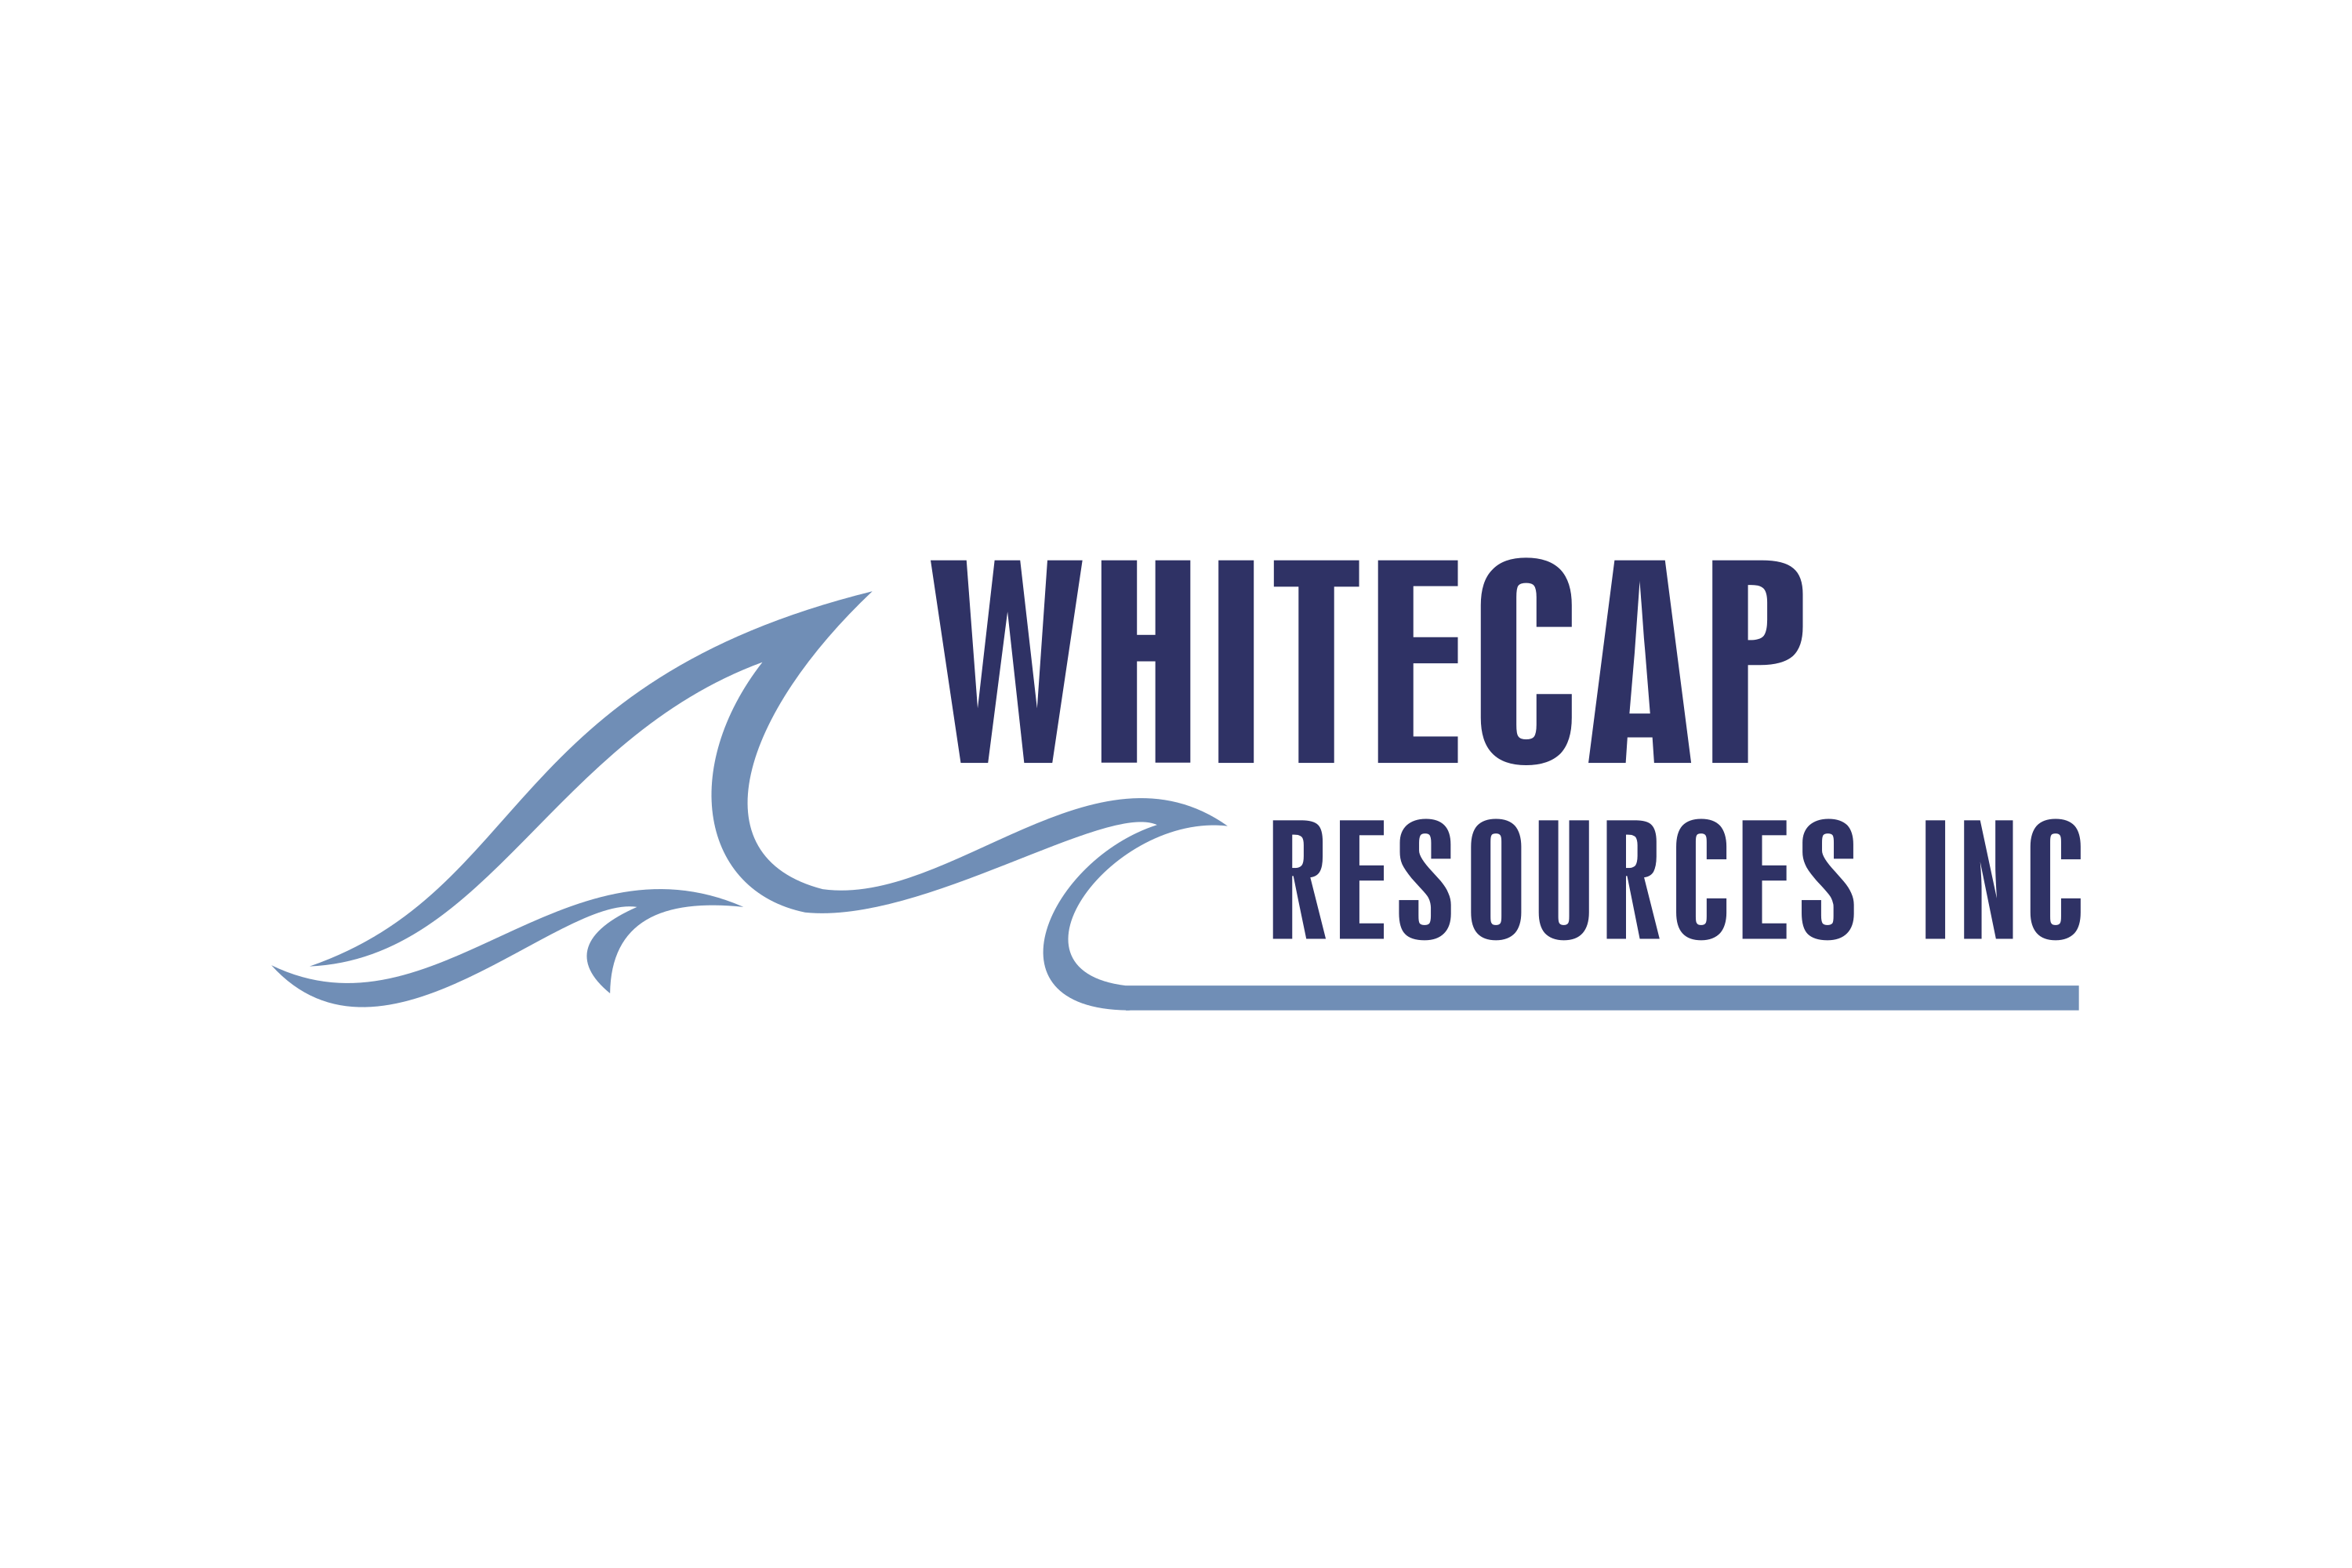 Whitecap Resources Inc